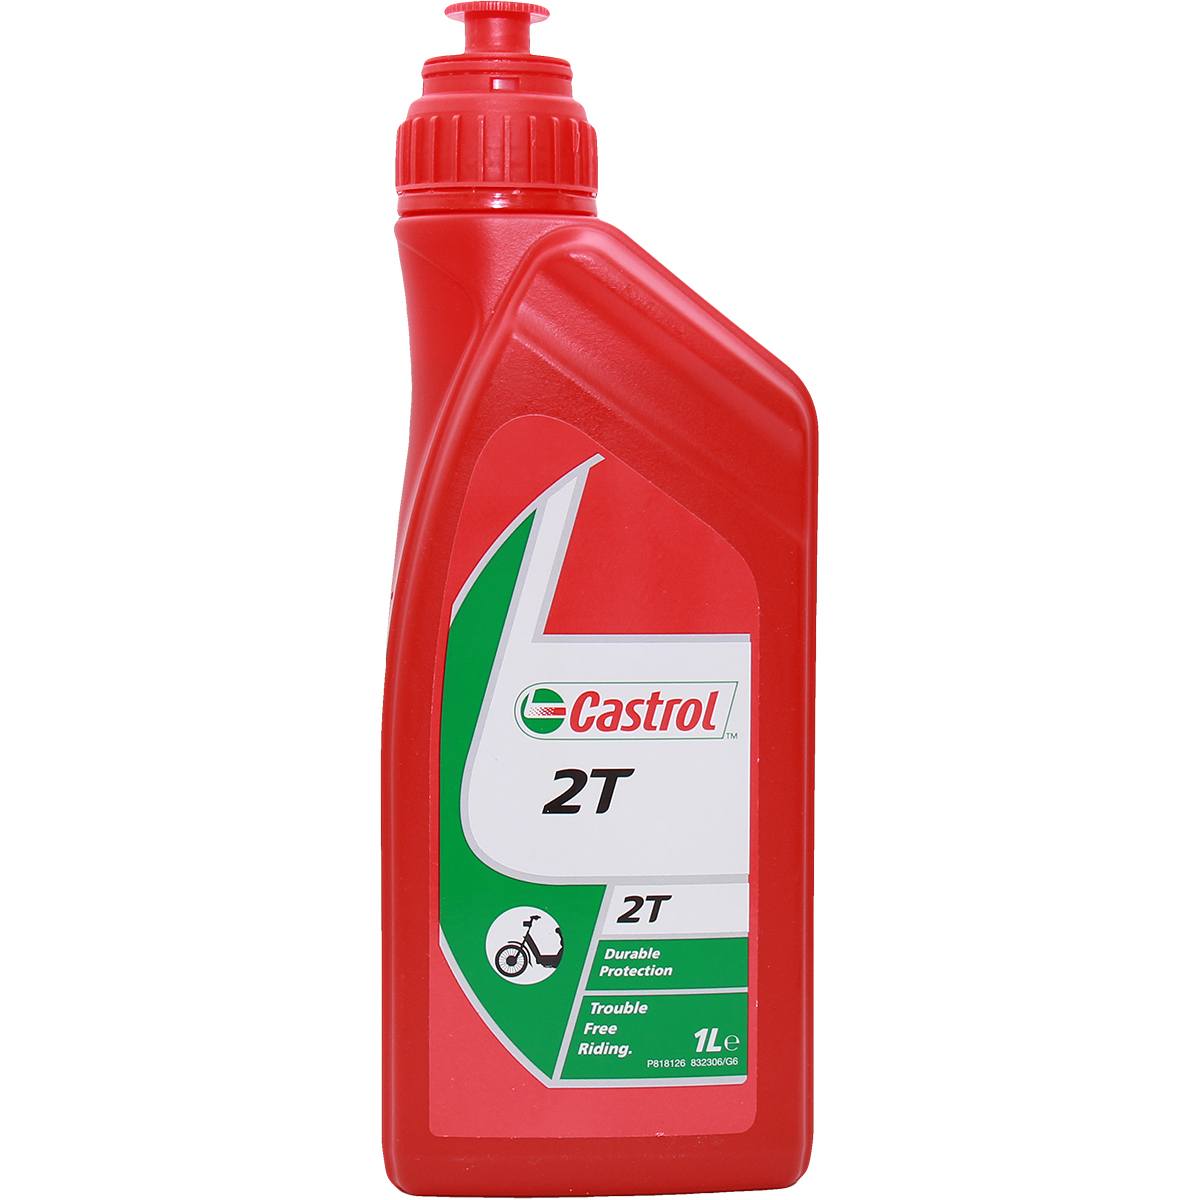 Castrol 2T 1 Liter